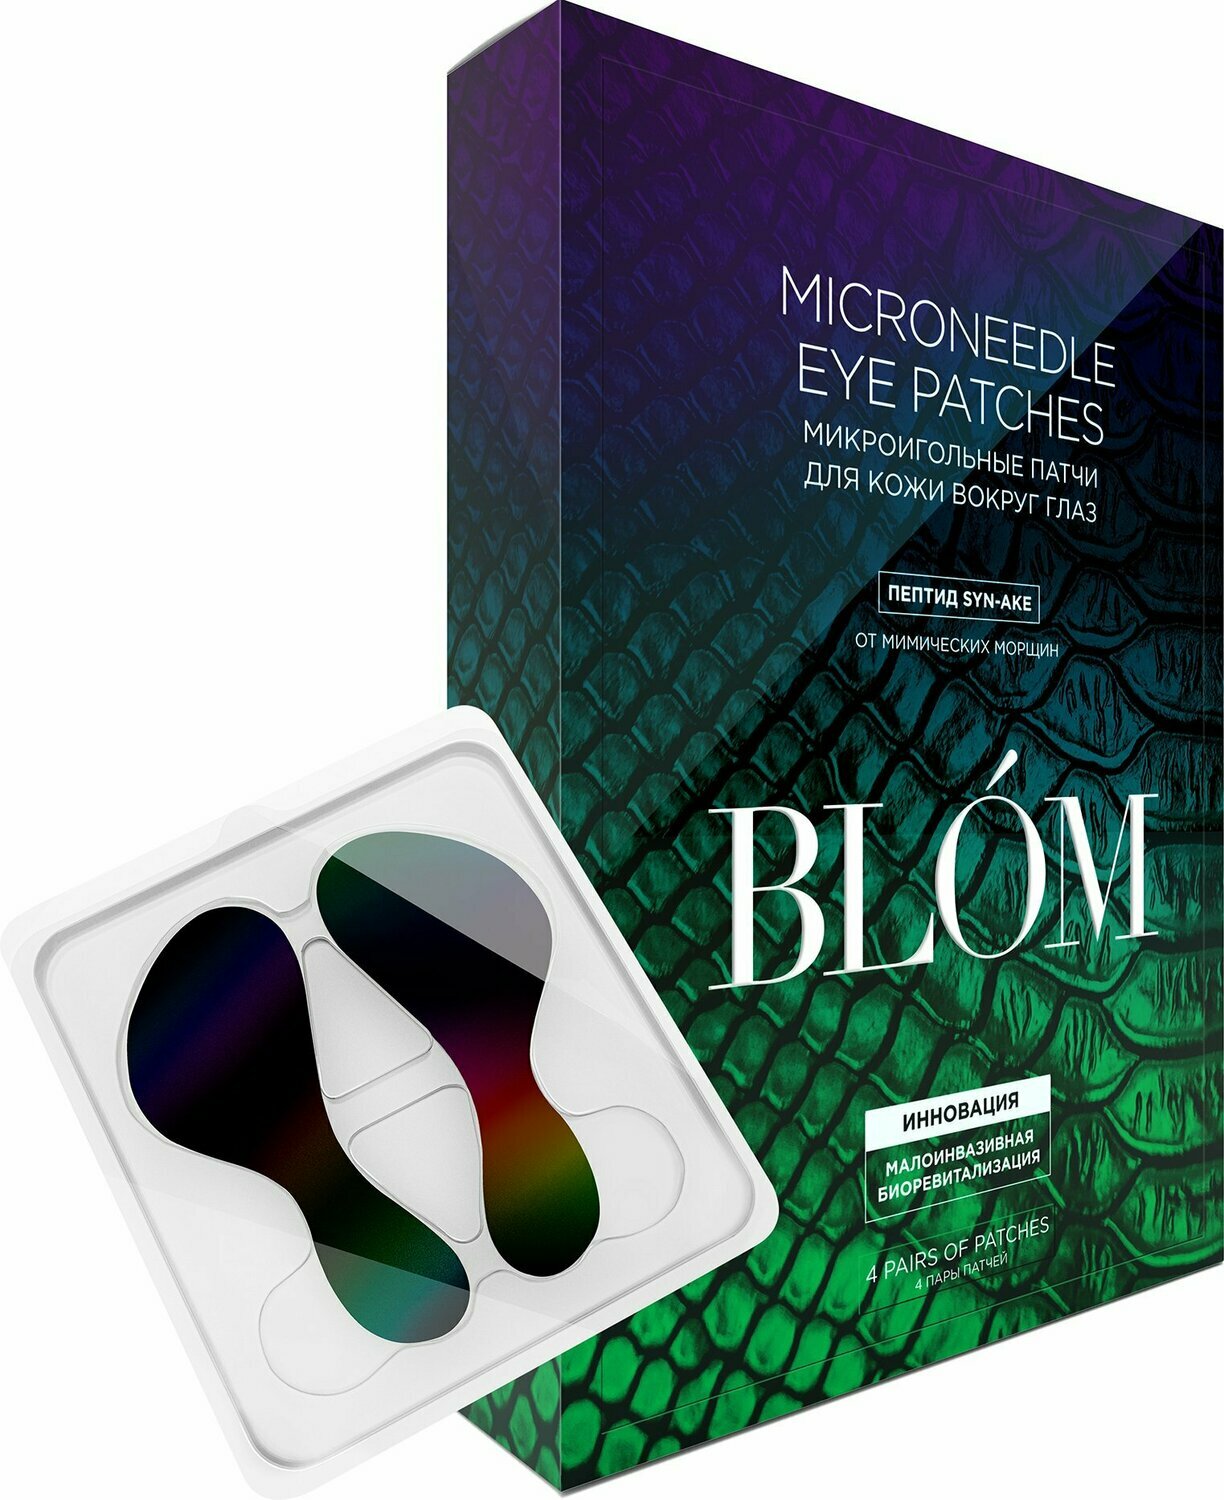 Blom Microneedle Eye Patches Syn-Ake Блум микроиголные патчи с пептидом Syn-Ake от мимических морщин